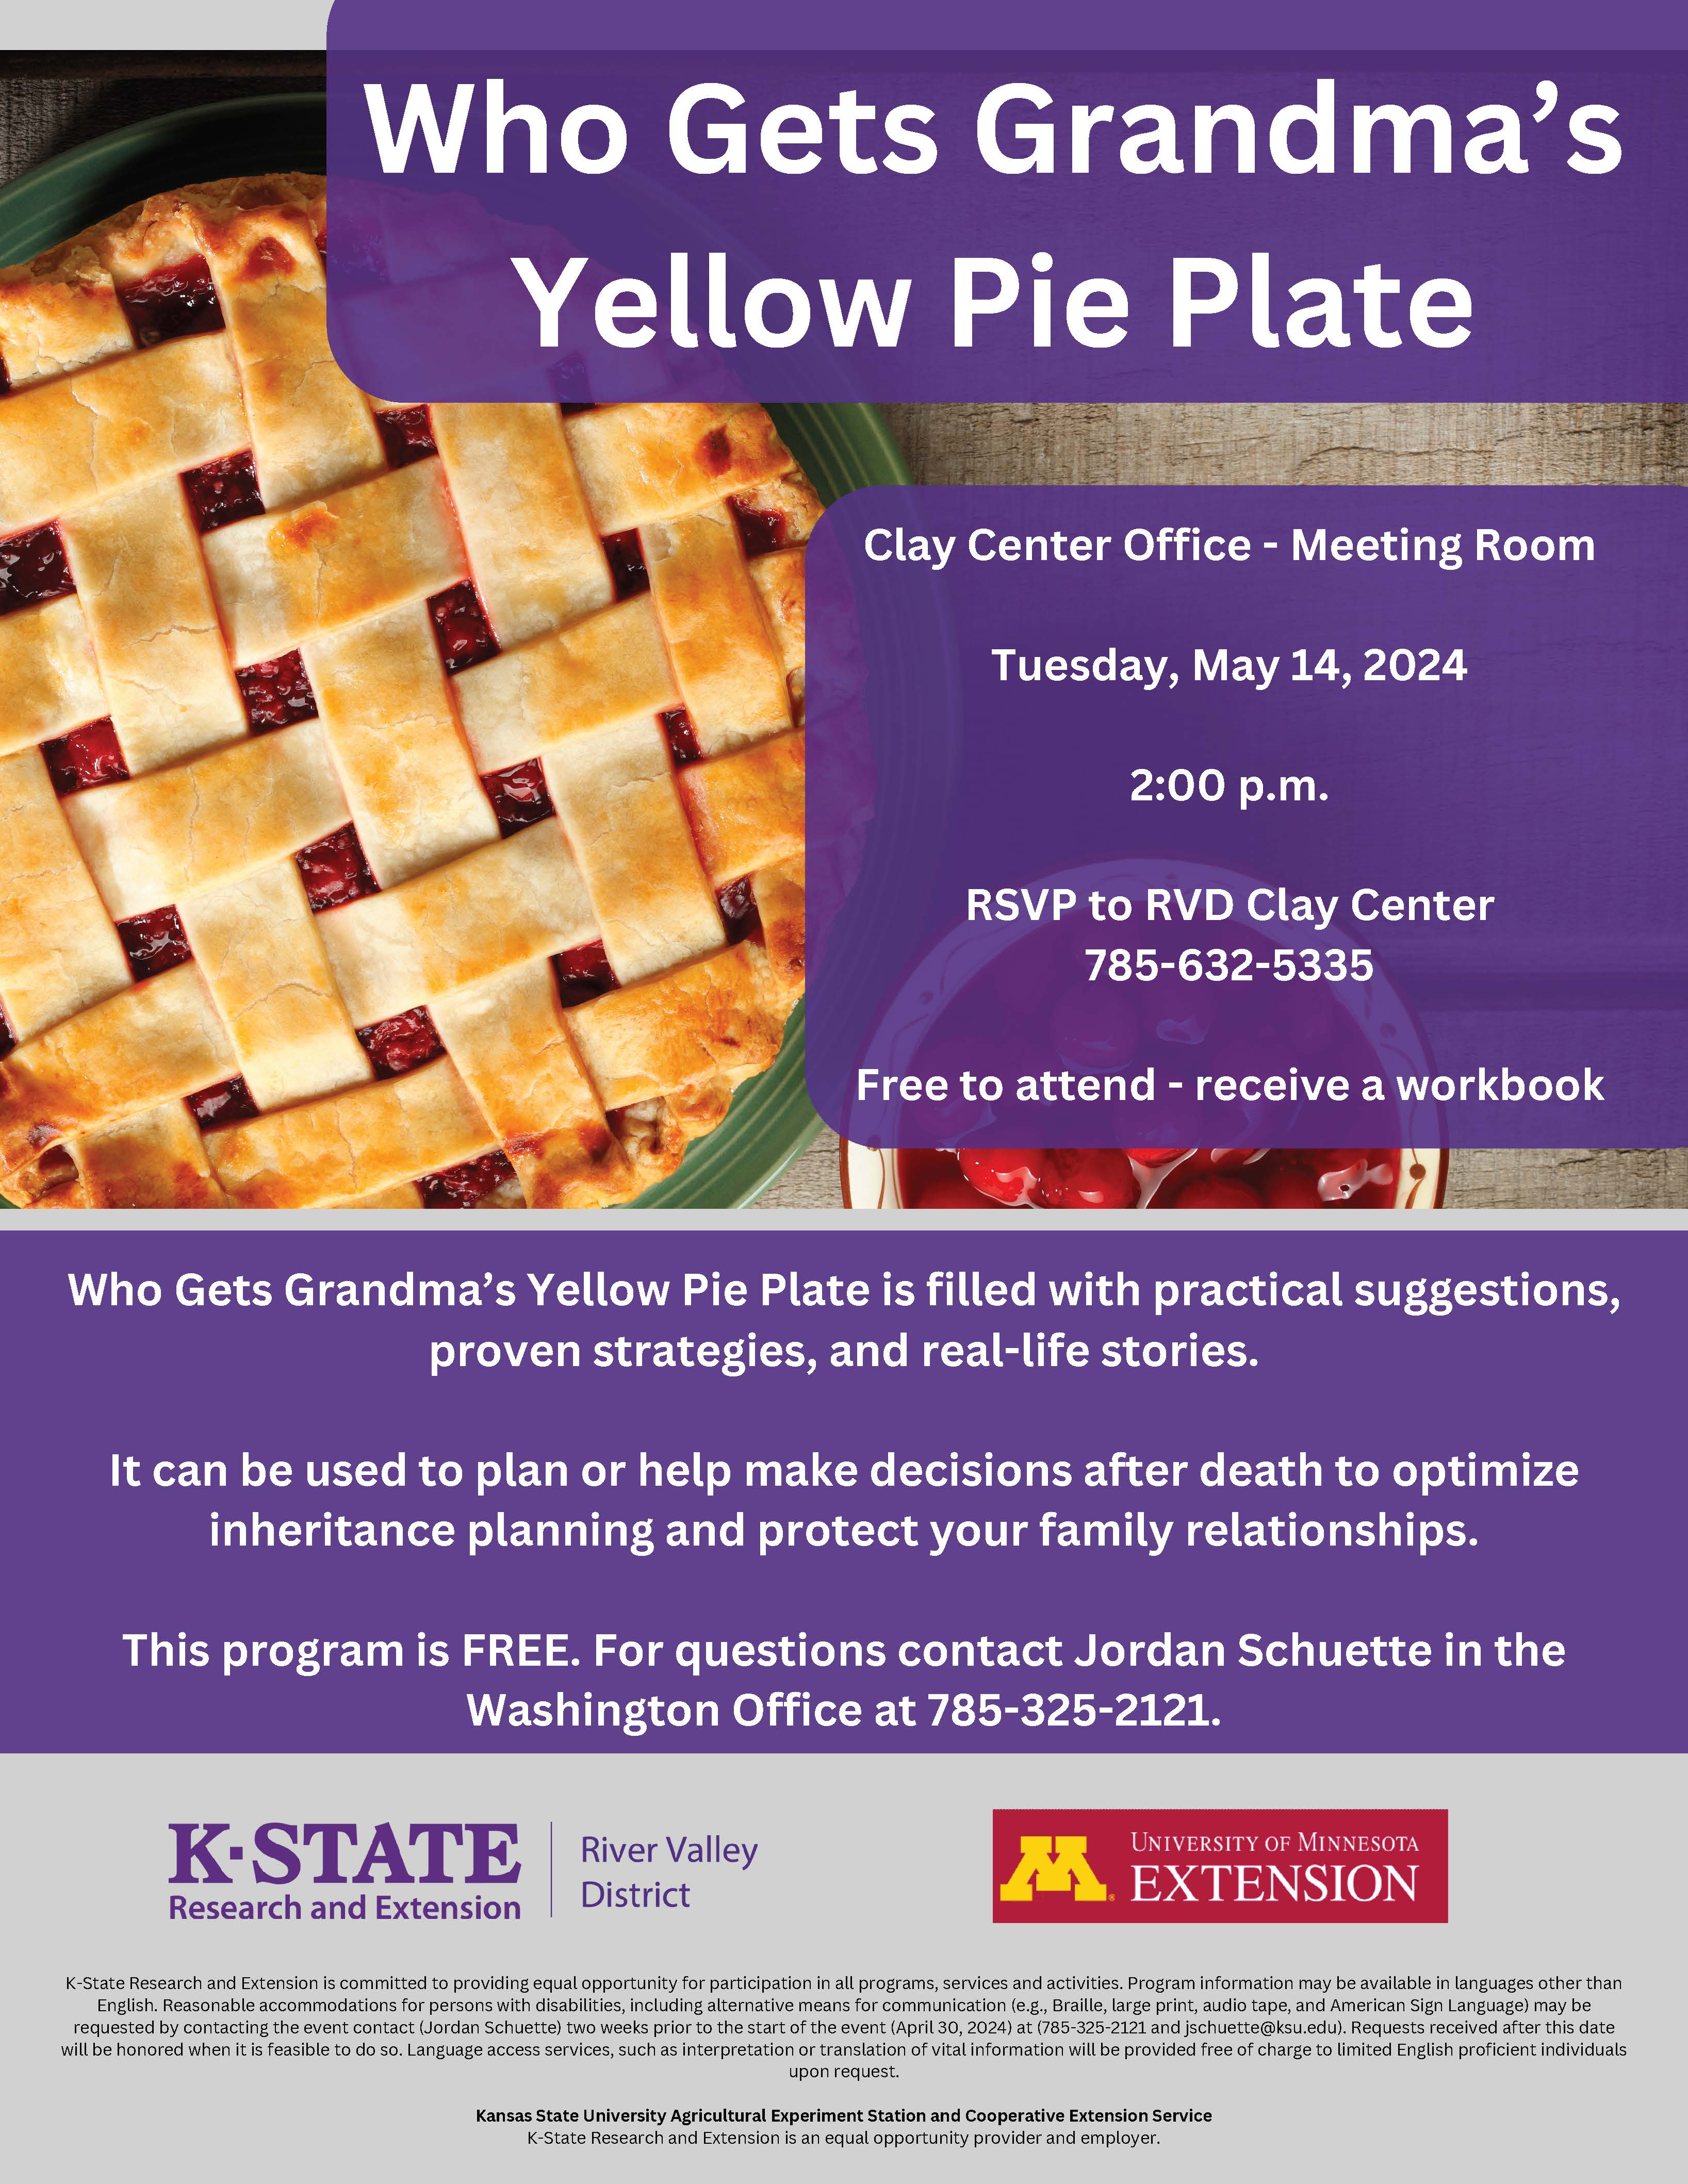 Who Get Grandma's Yellow Pie Plate